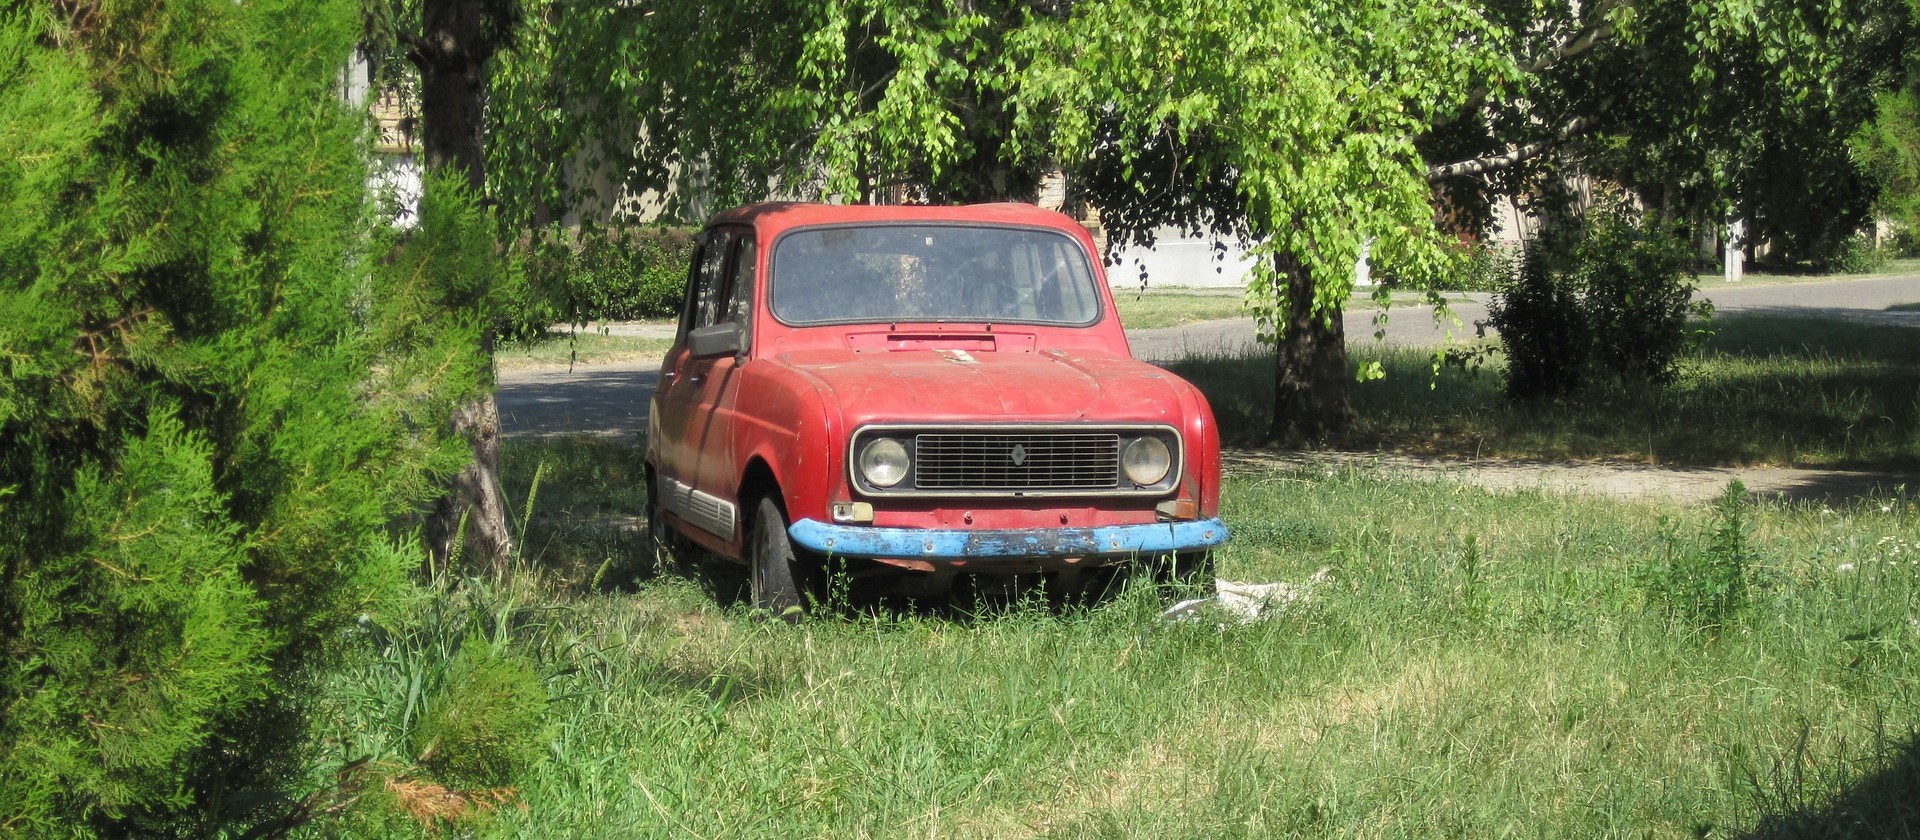 Abandoned Oldtimer Car in Alexandria, Virginia - VeteranCarDonations.org